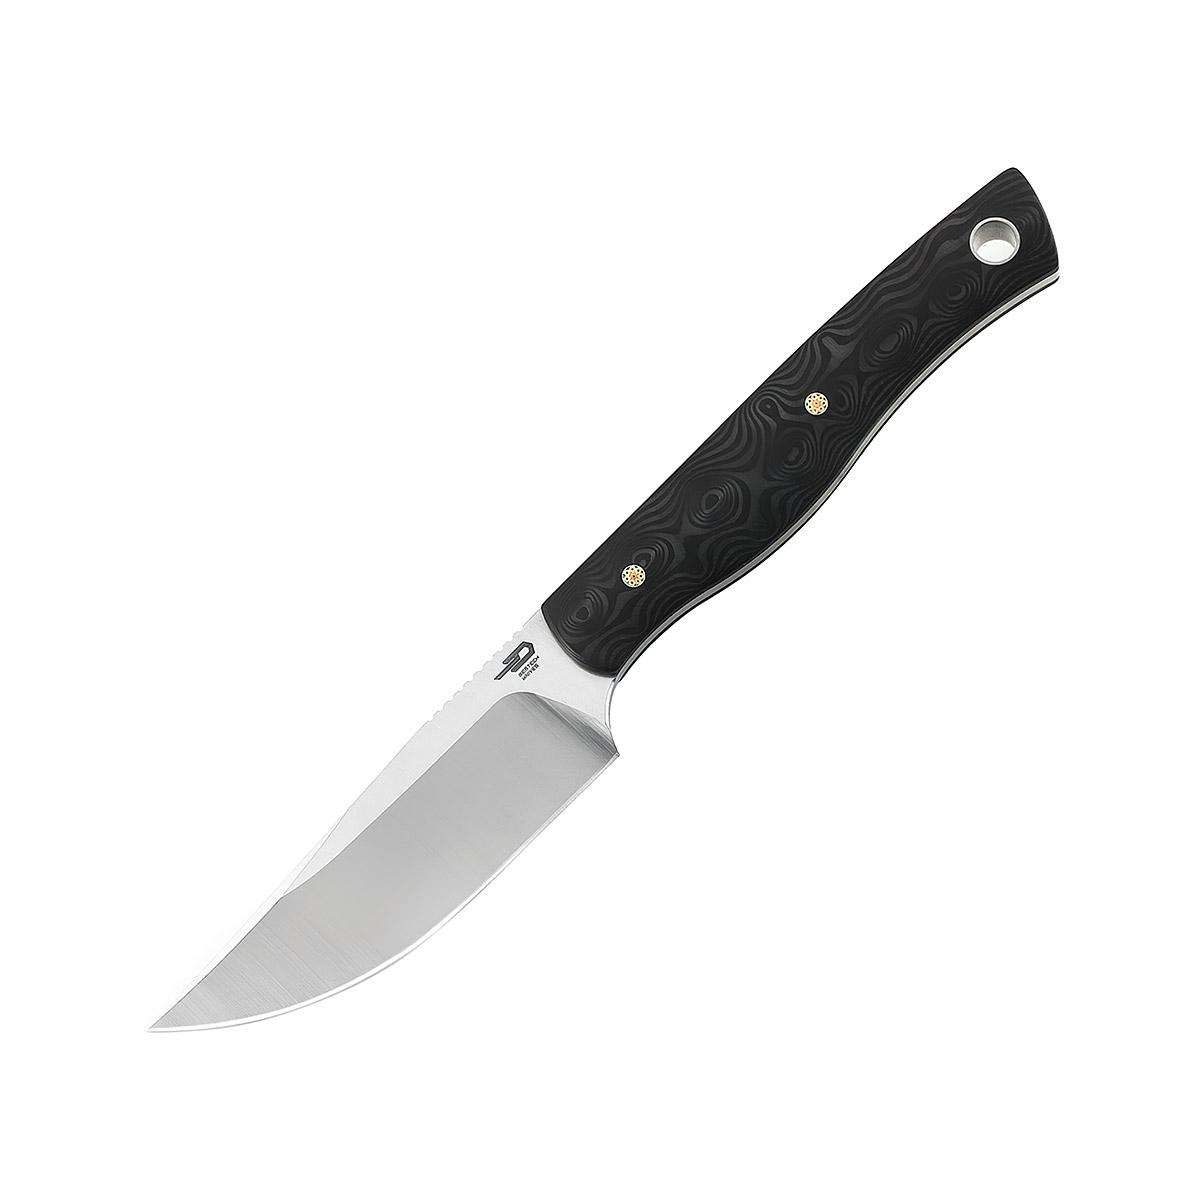  Heidi Fixed Blade Carbon Fiber Knife